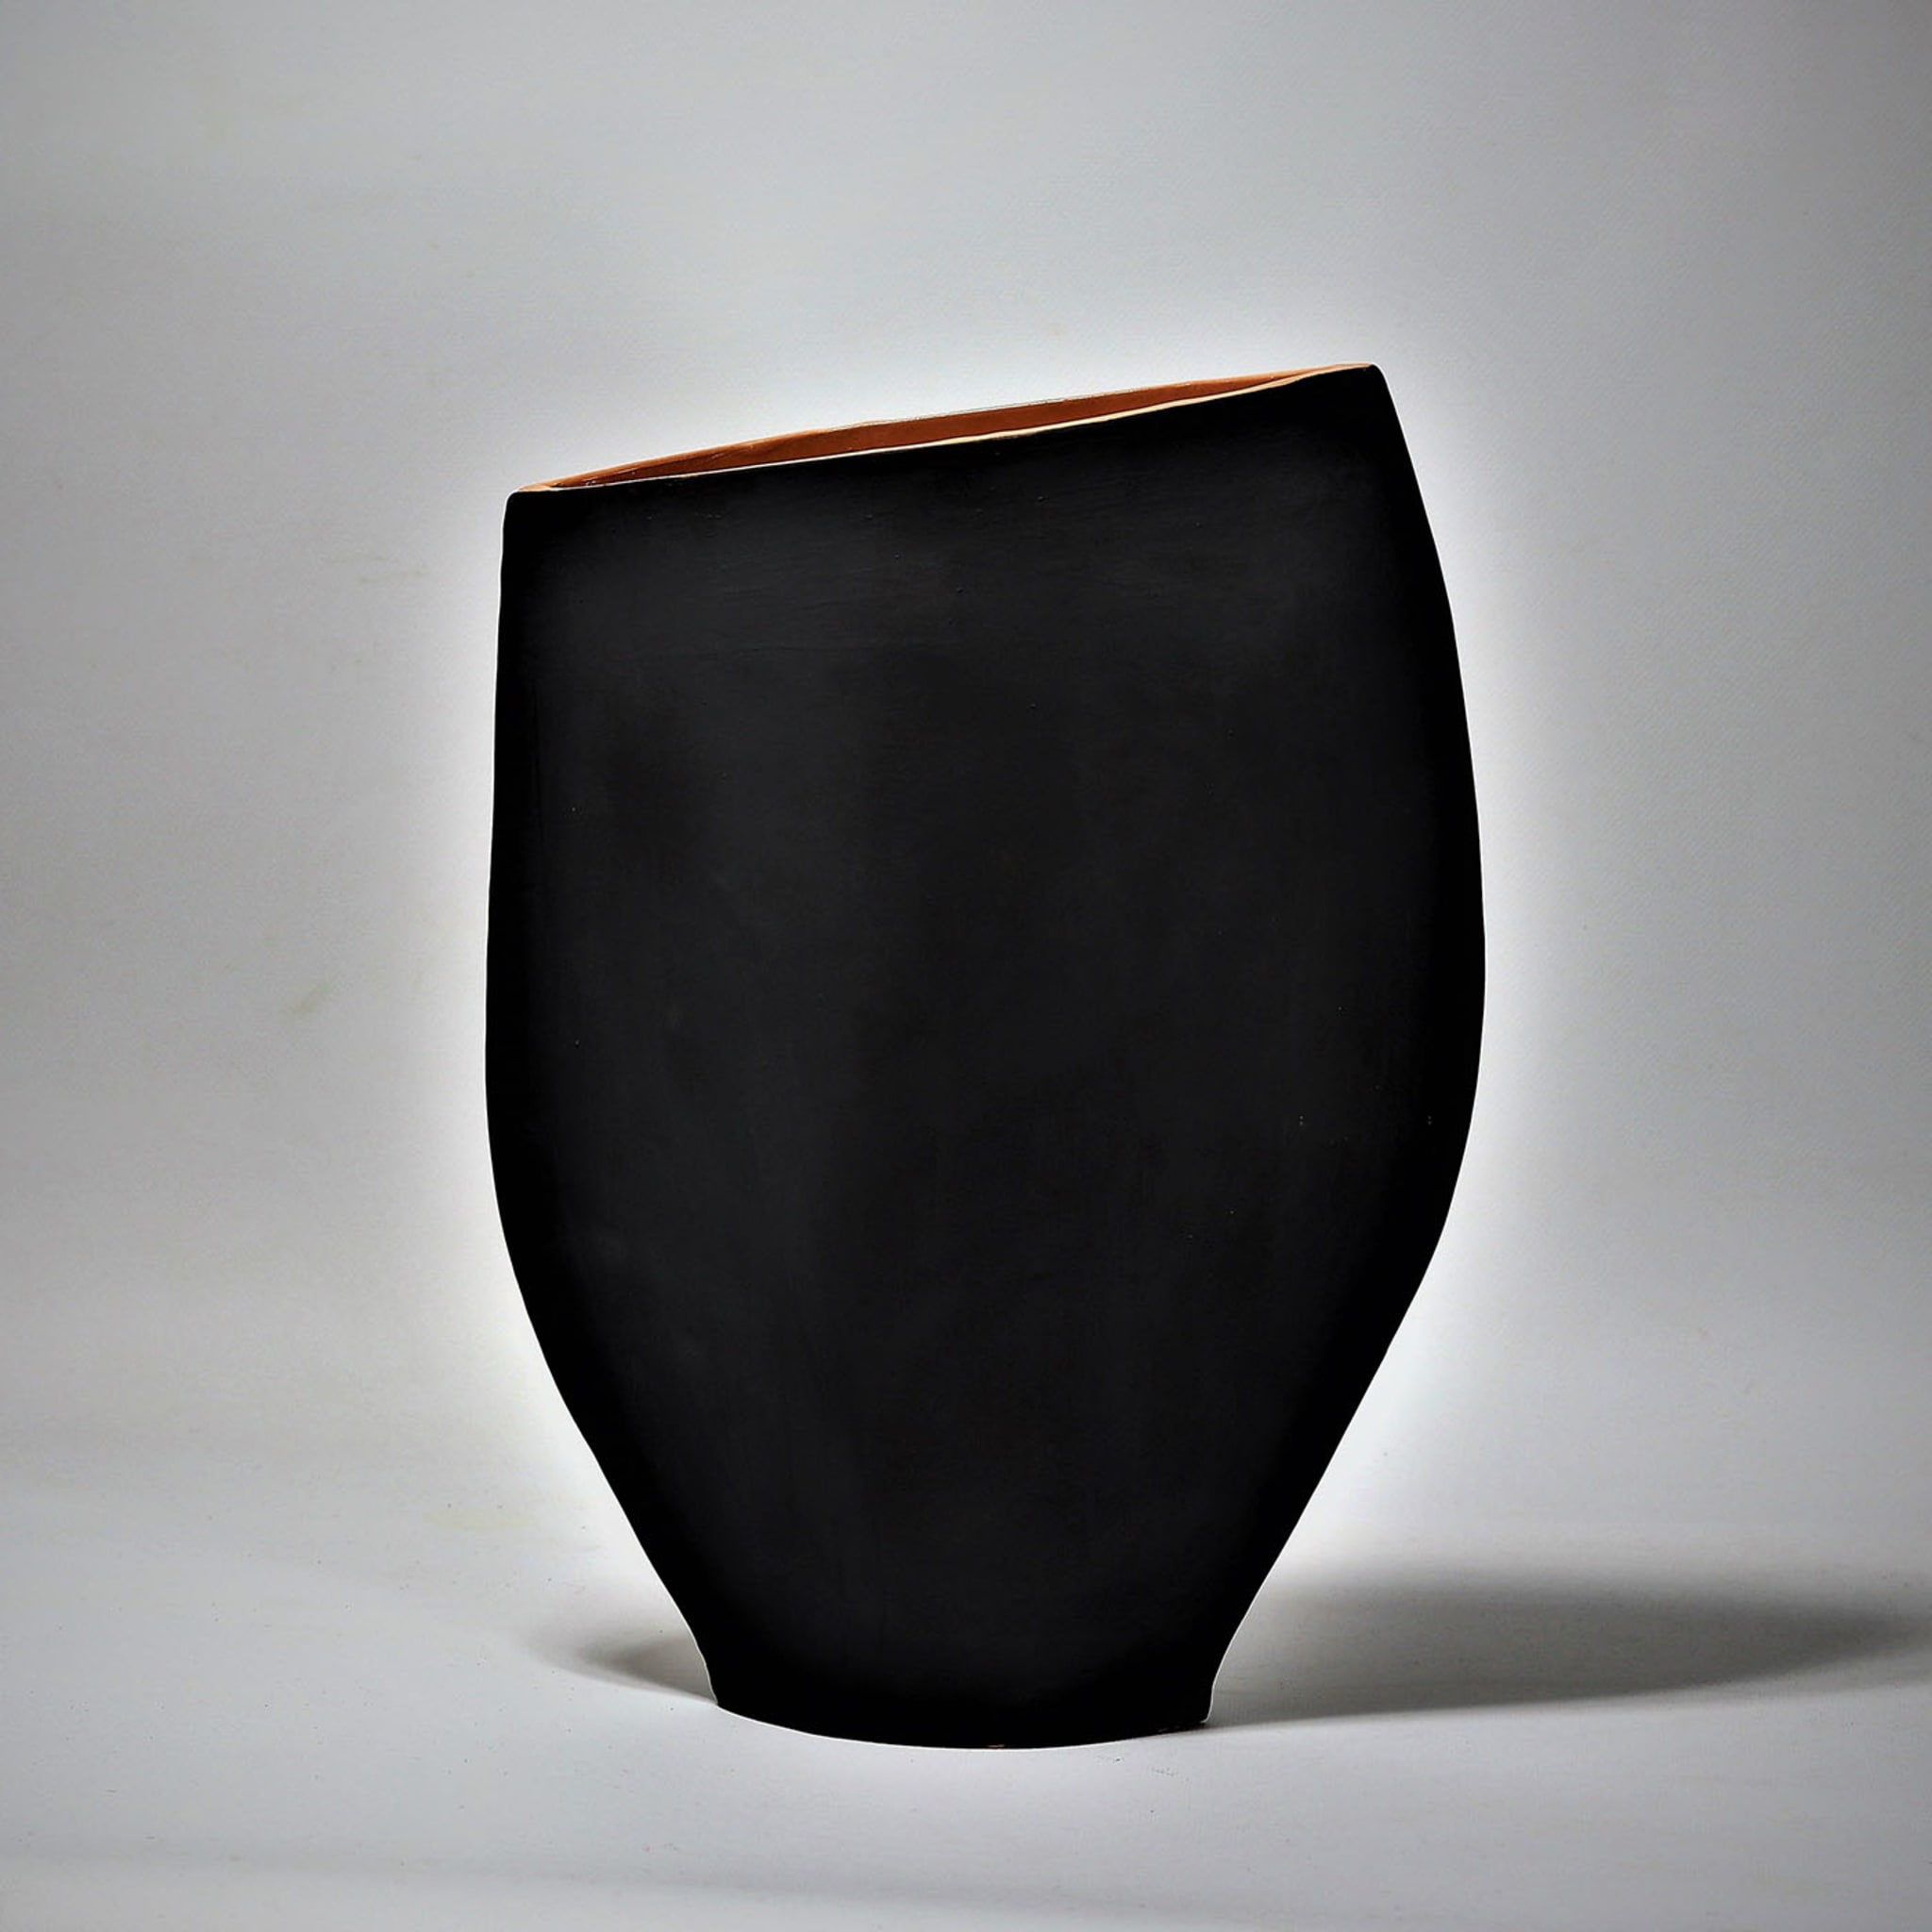 Bellas Animeddas Polychrome Vase #1 - Alternative Ansicht 2